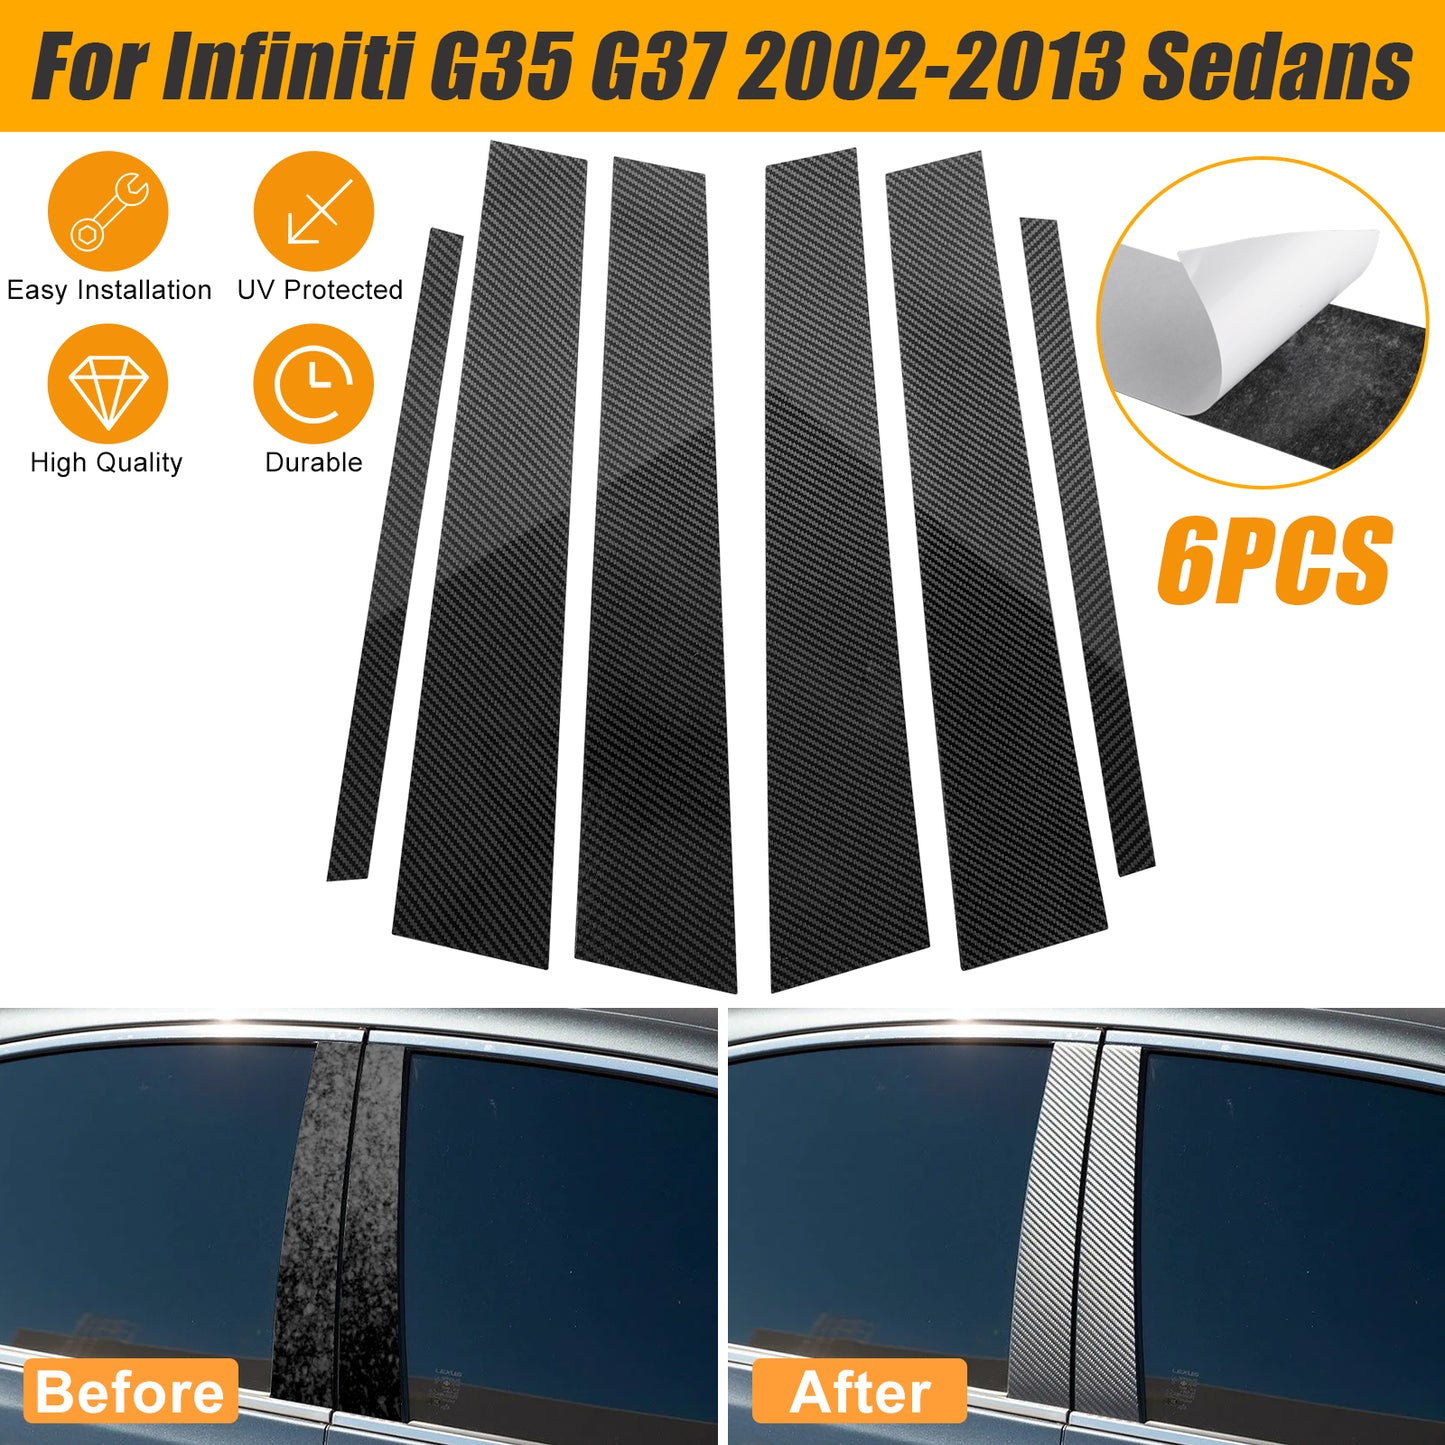 6pcs Carbon Fiber Pillar Posts for Infiniti G35 G37 - Durable, Stylish, and Easy to Install, For Infiniti G35 G37 2002-2013 Sedan